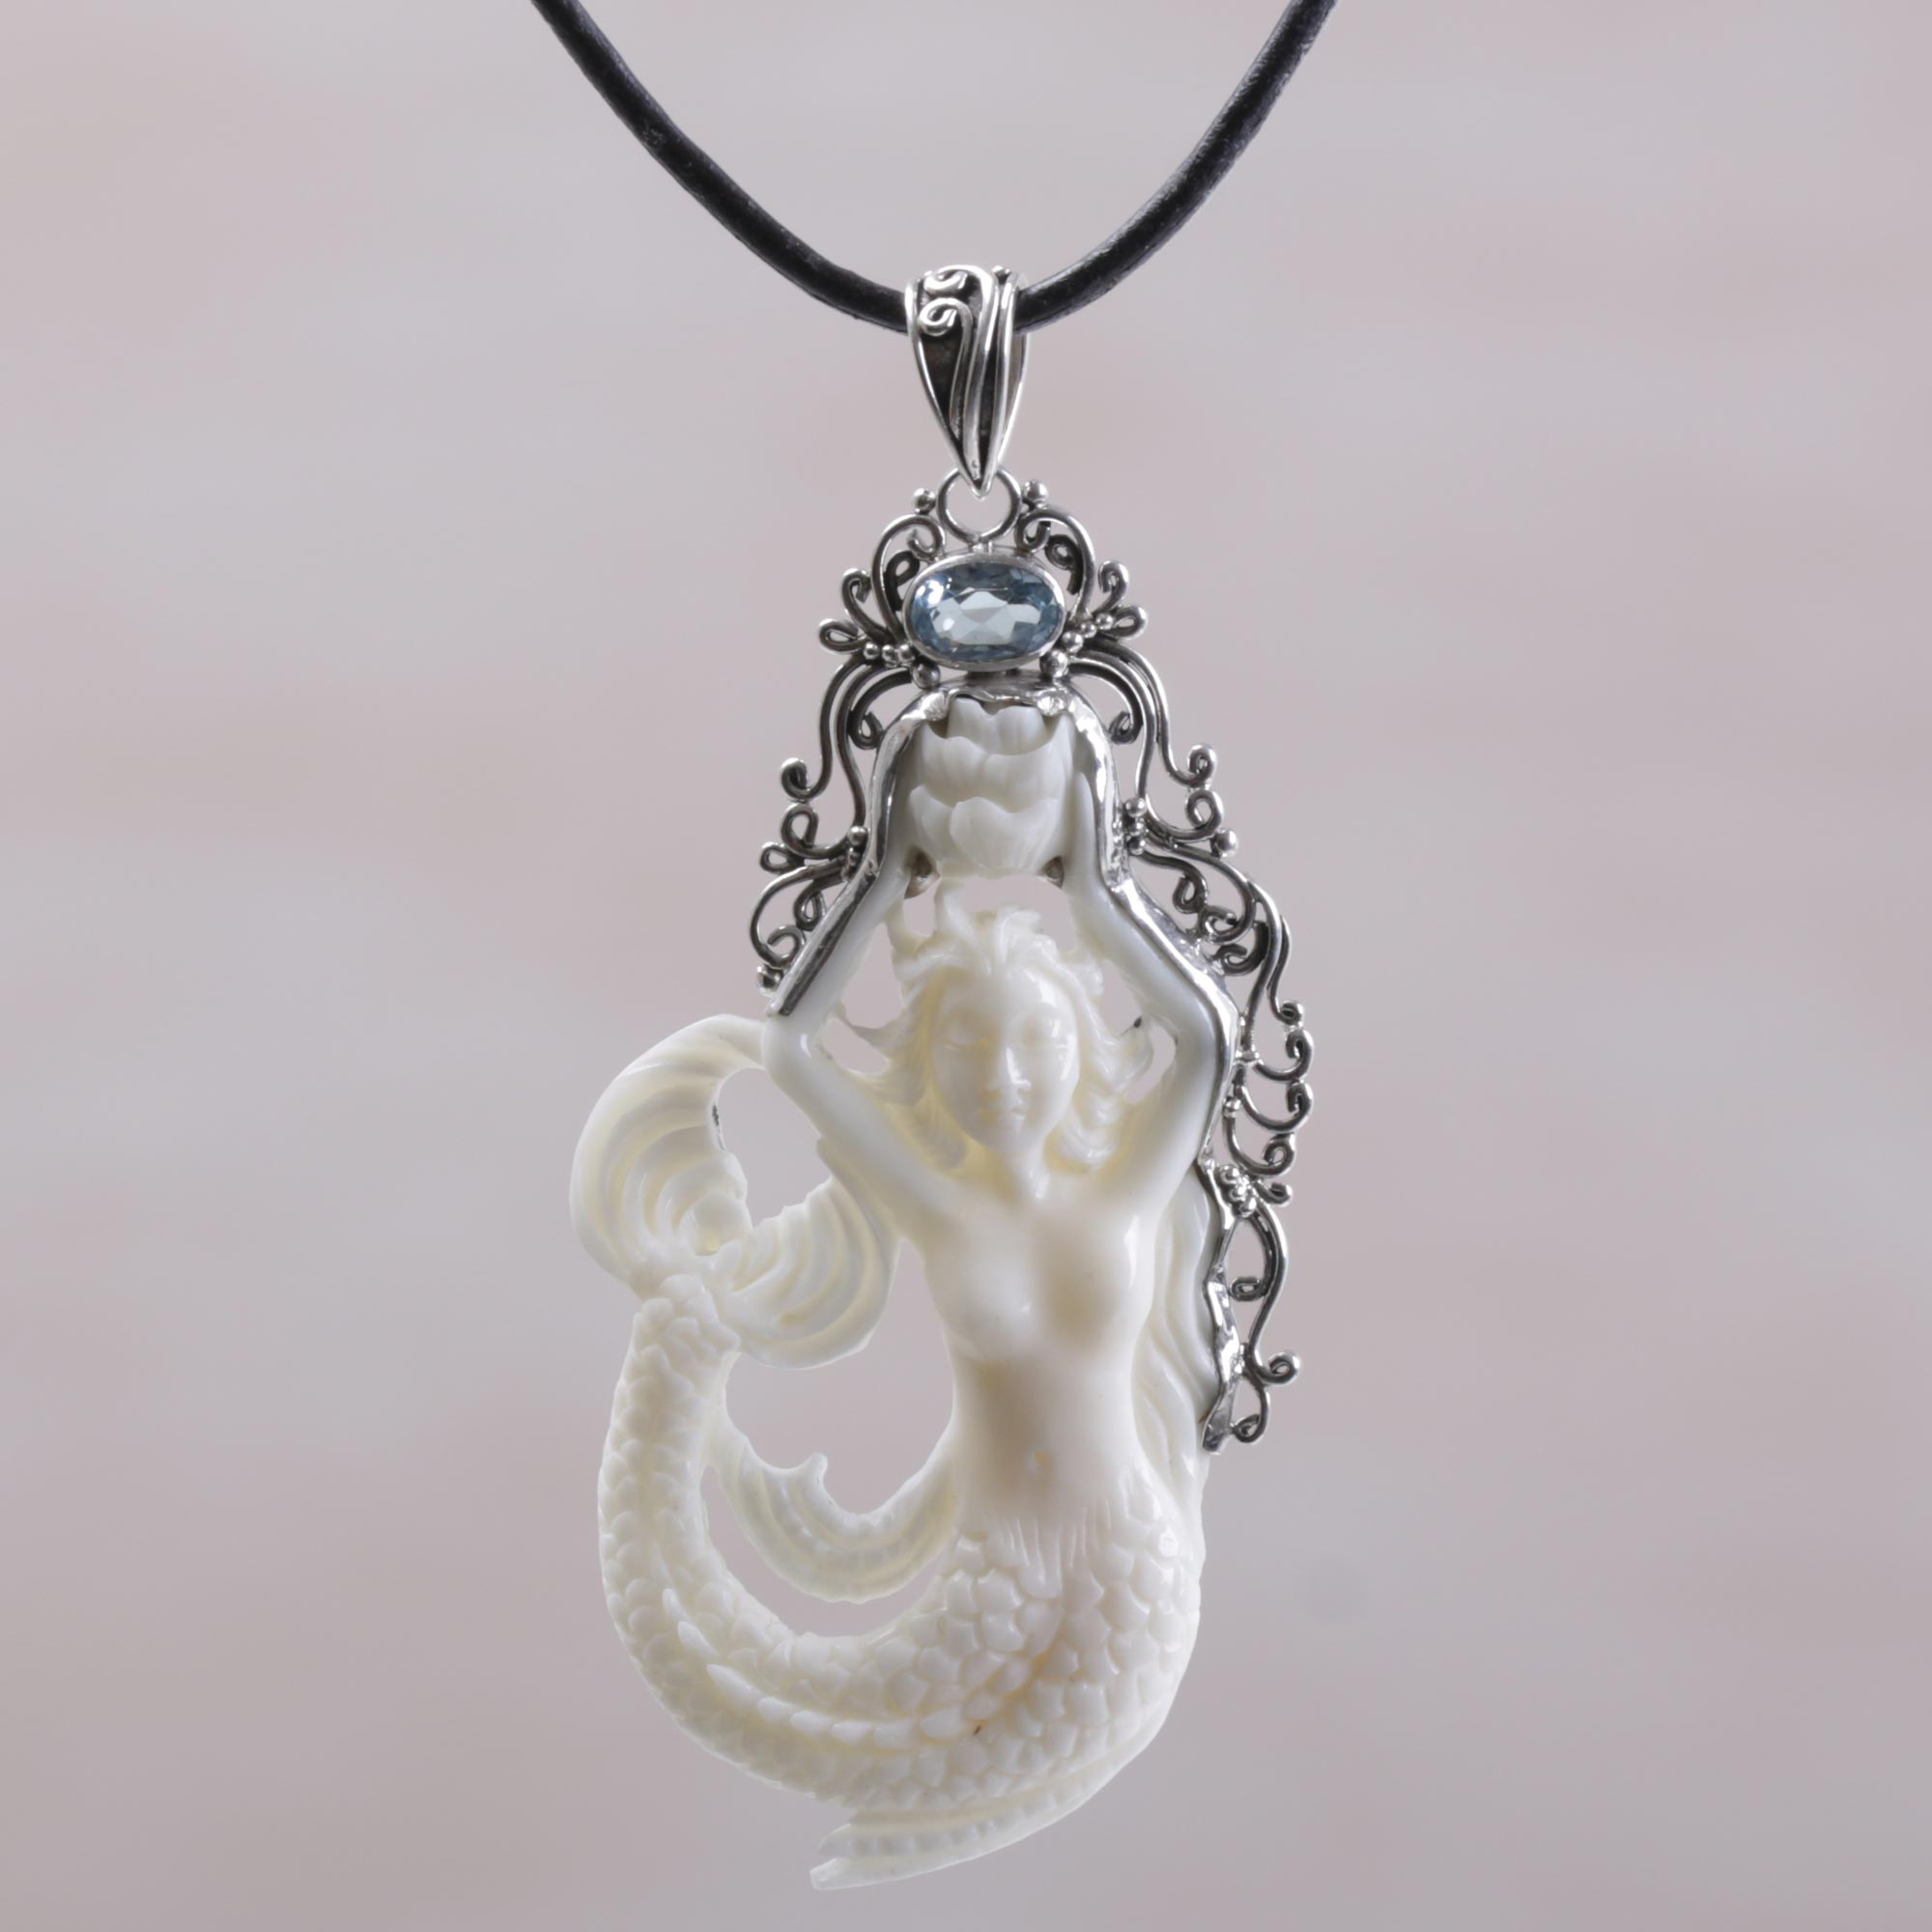 Beautiful Mermaid Necklace